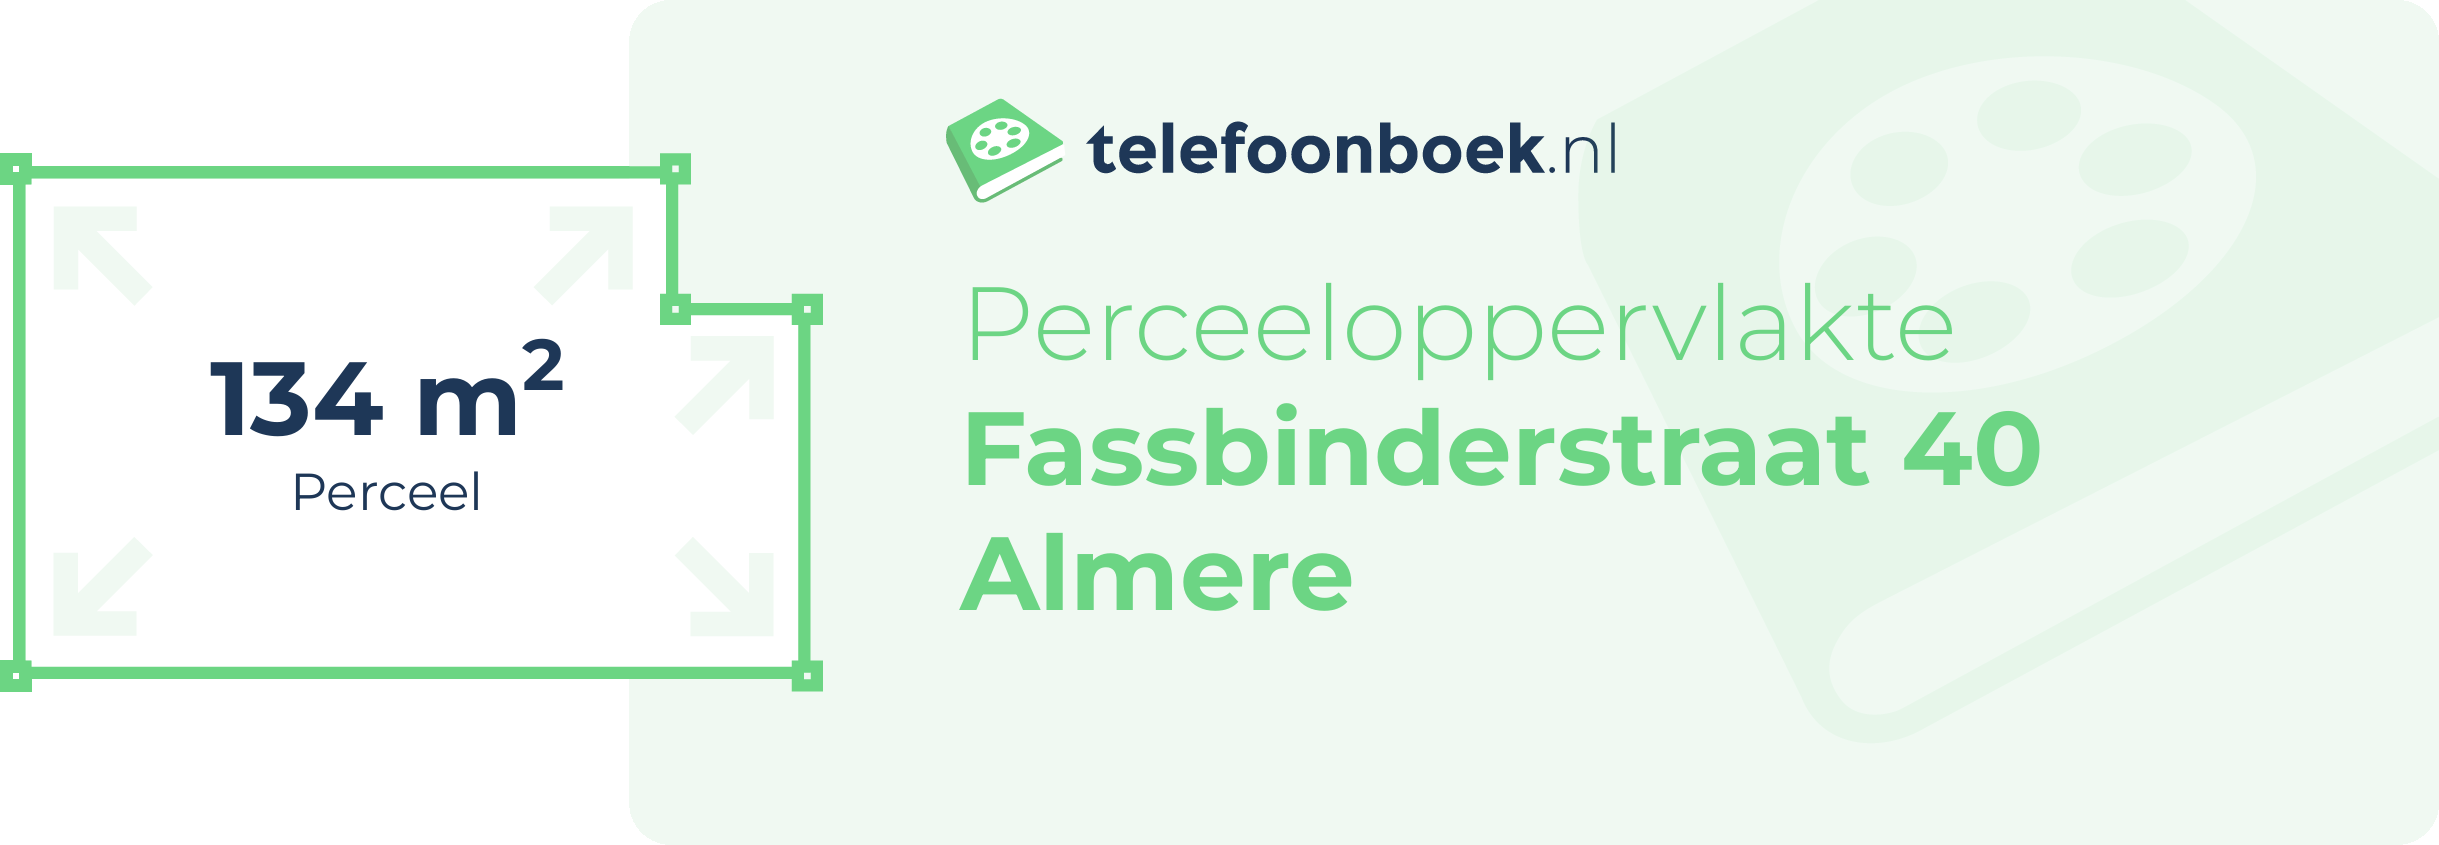 Perceeloppervlakte Fassbinderstraat 40 Almere